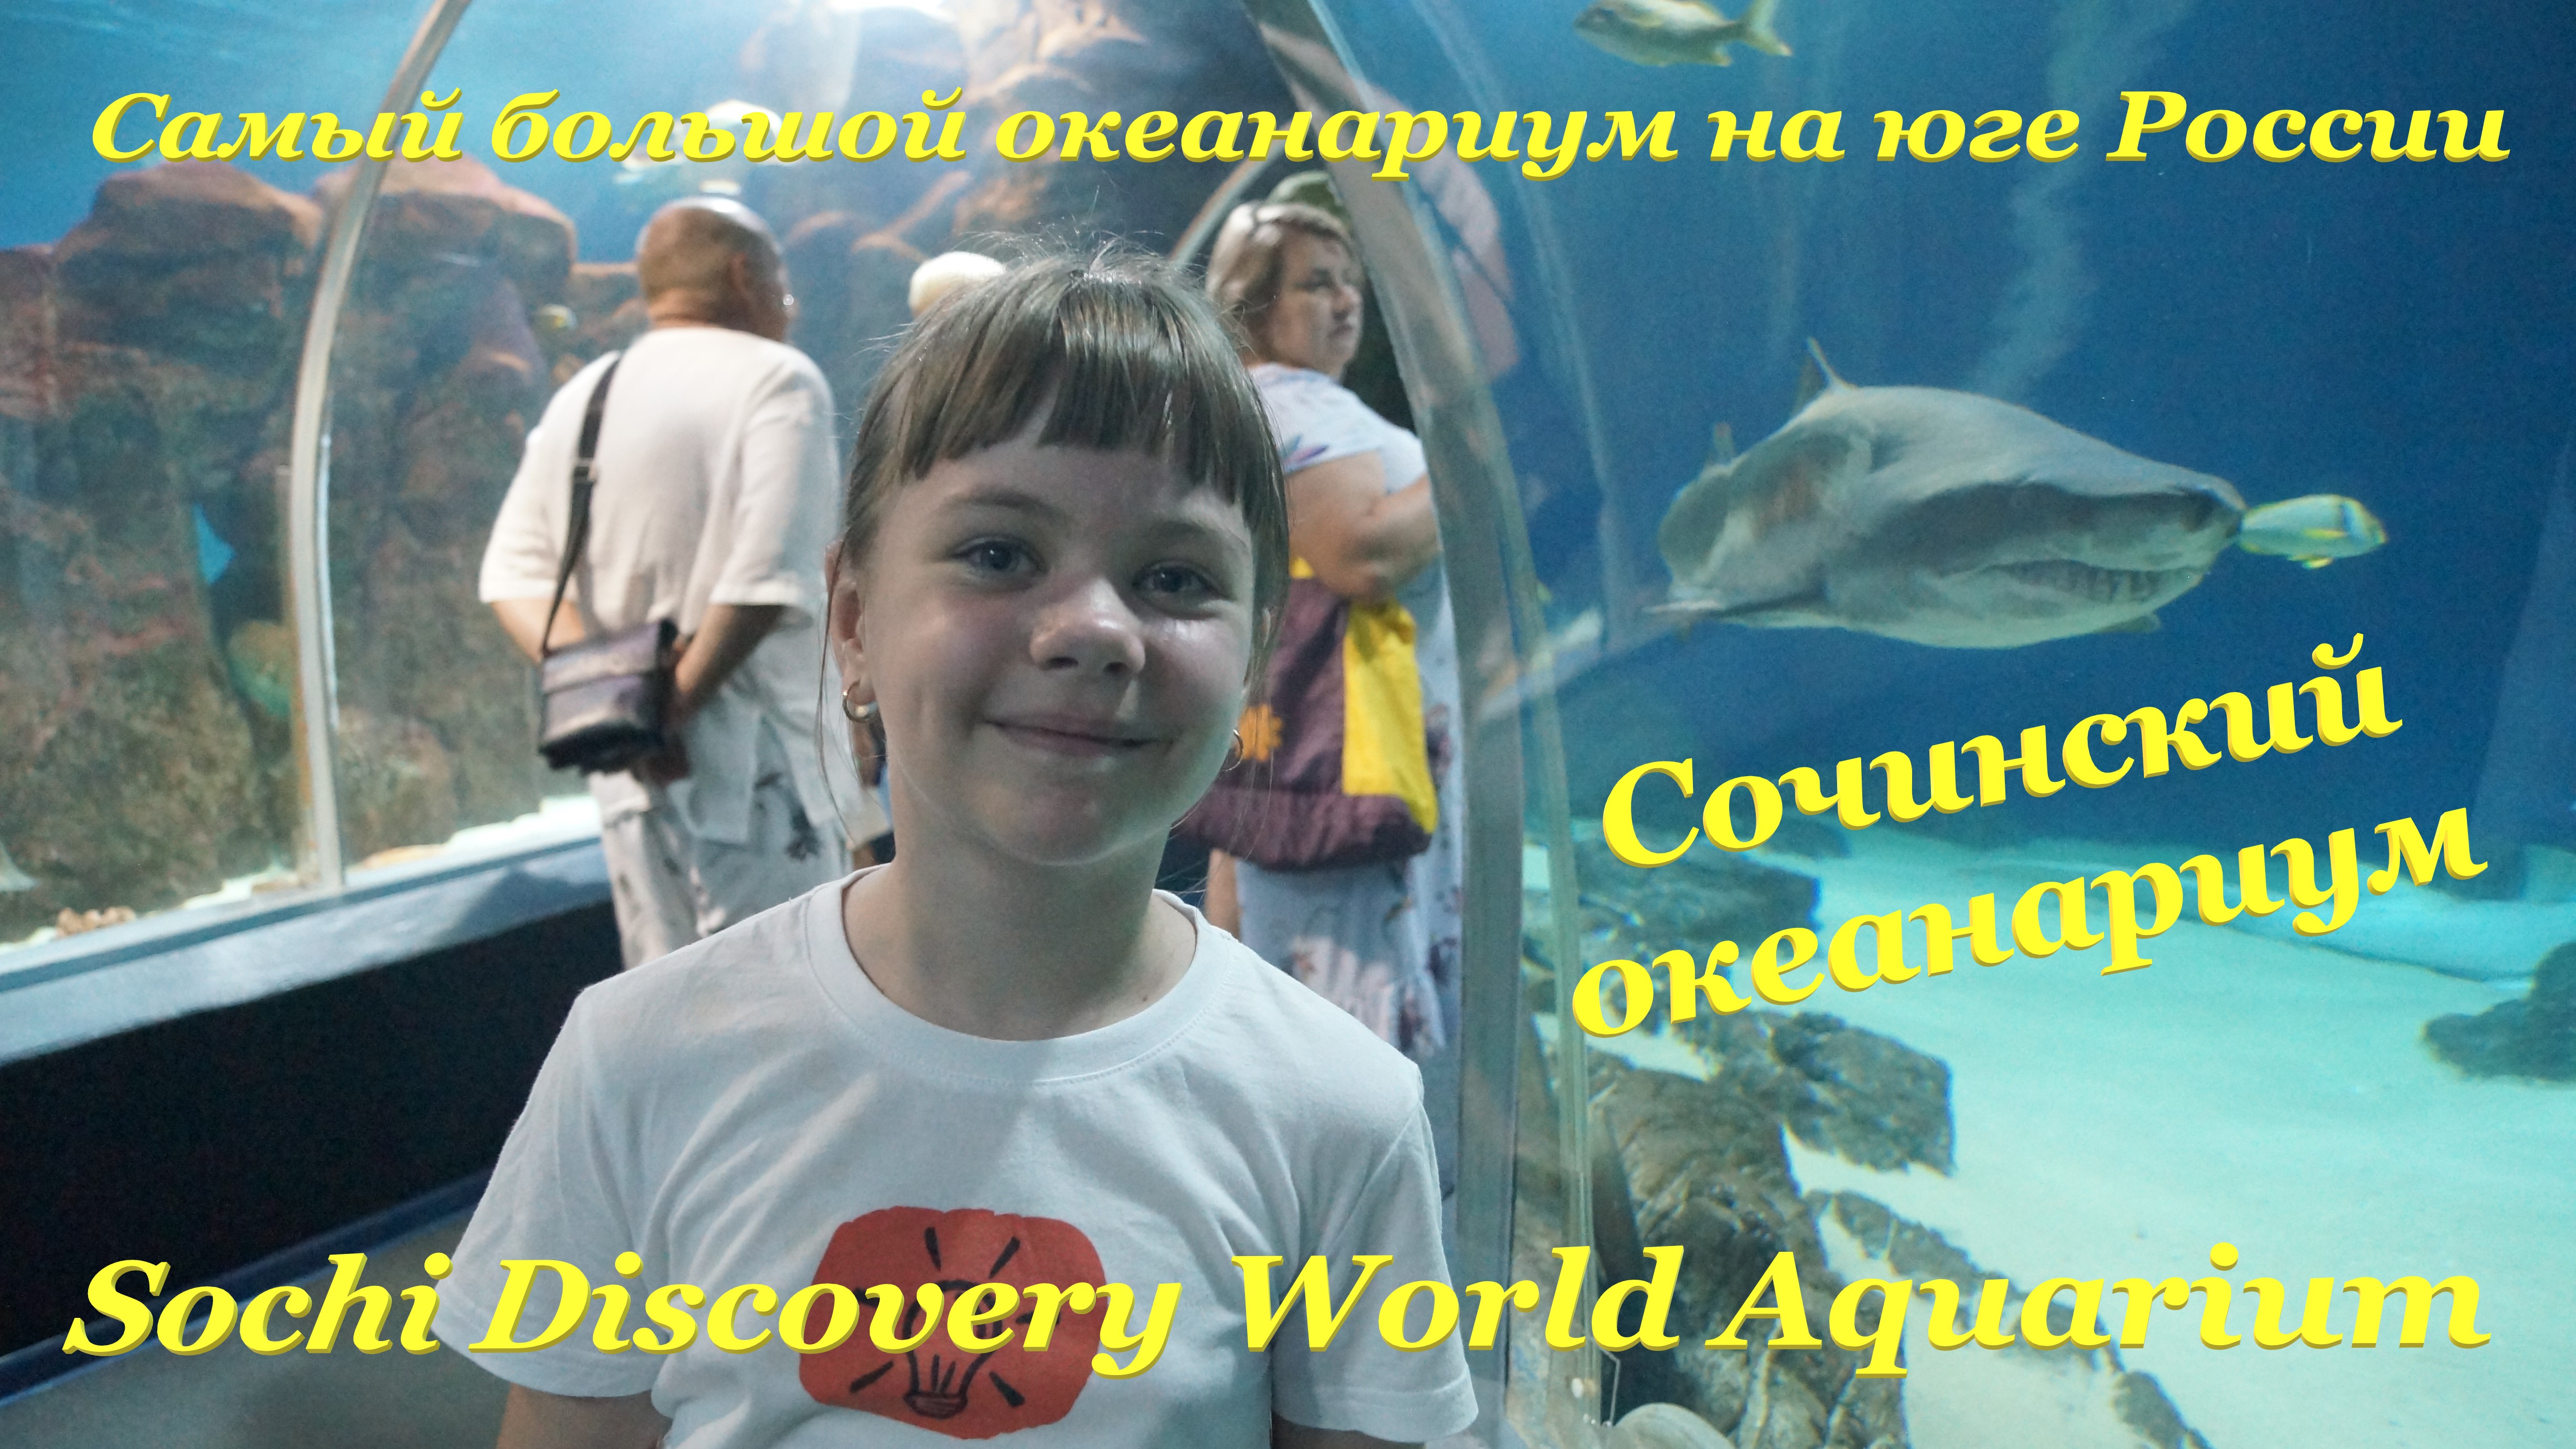 Сочинский океанариум? / Sochi Discovery World Aquarium? / Самый большой океанариум на юге России?